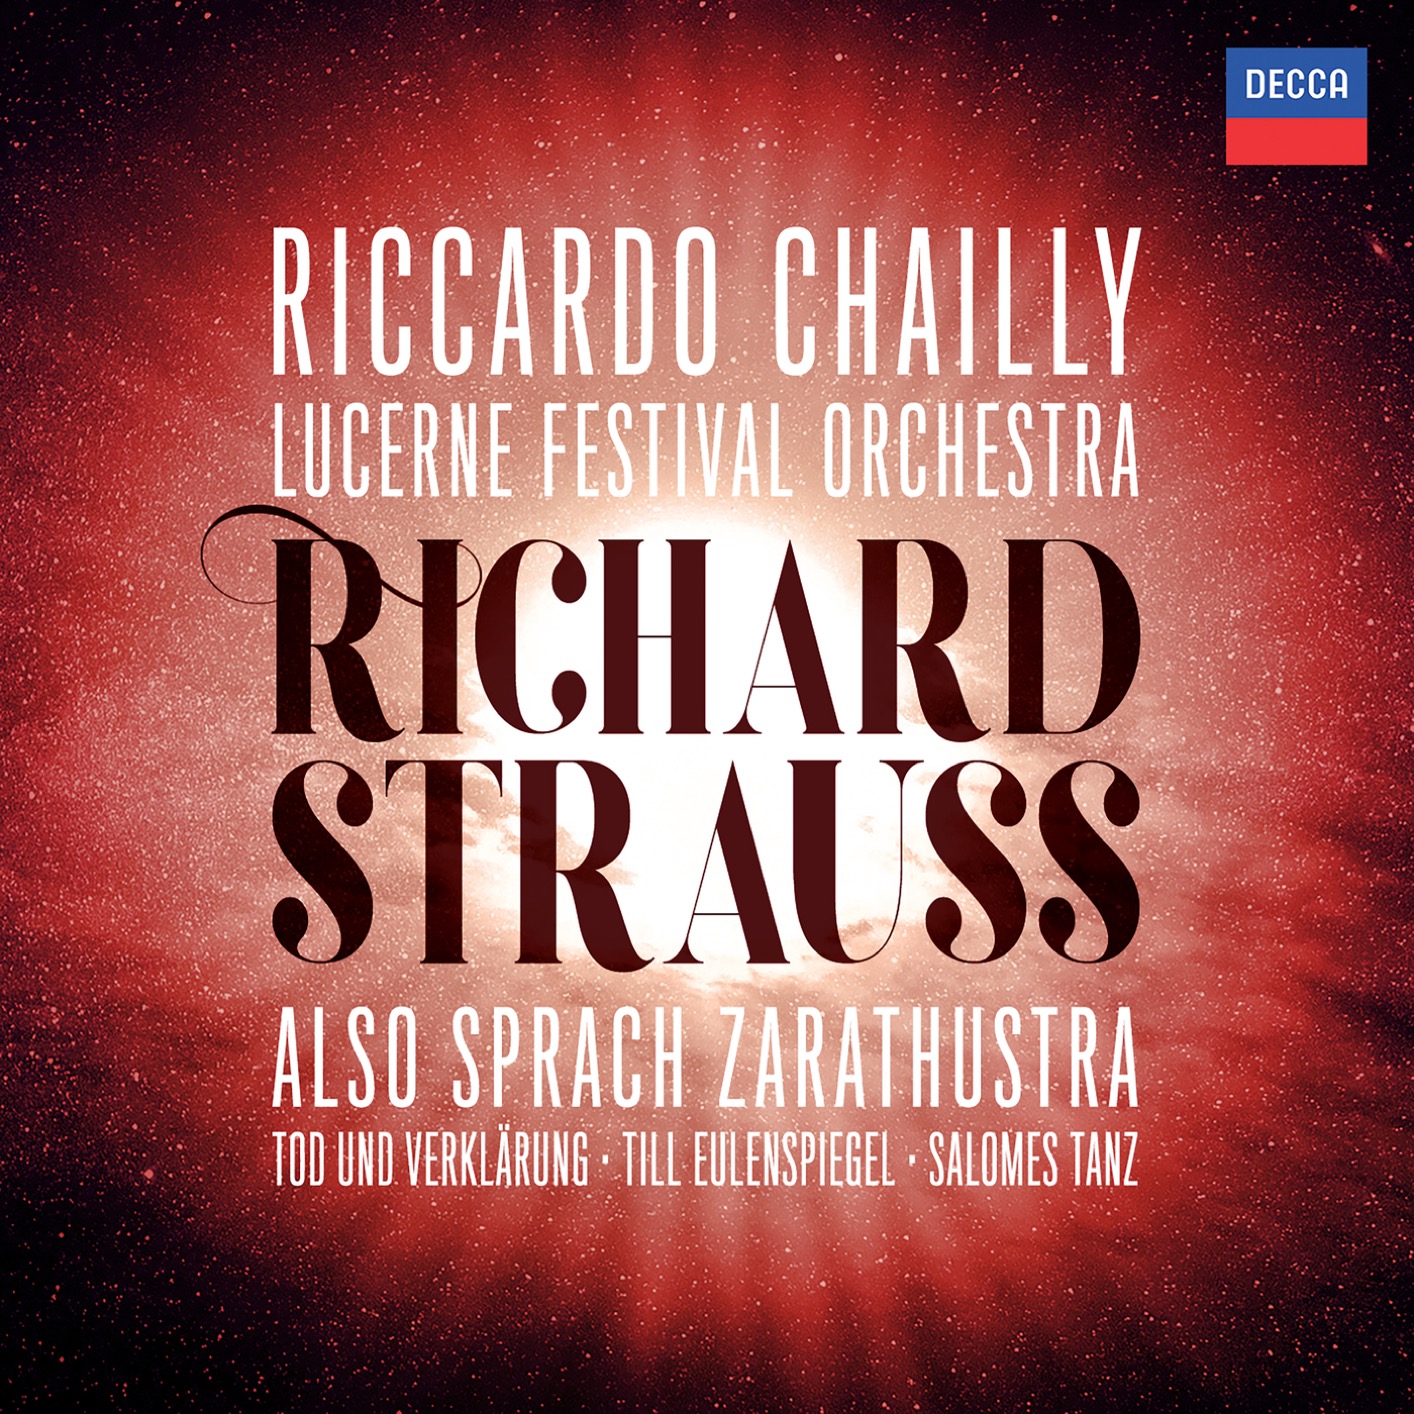 Riccardo Chailly & Lucerne Festival Orchestra - Richard Strauss (2019) [FLAC 24bit/96kHz]